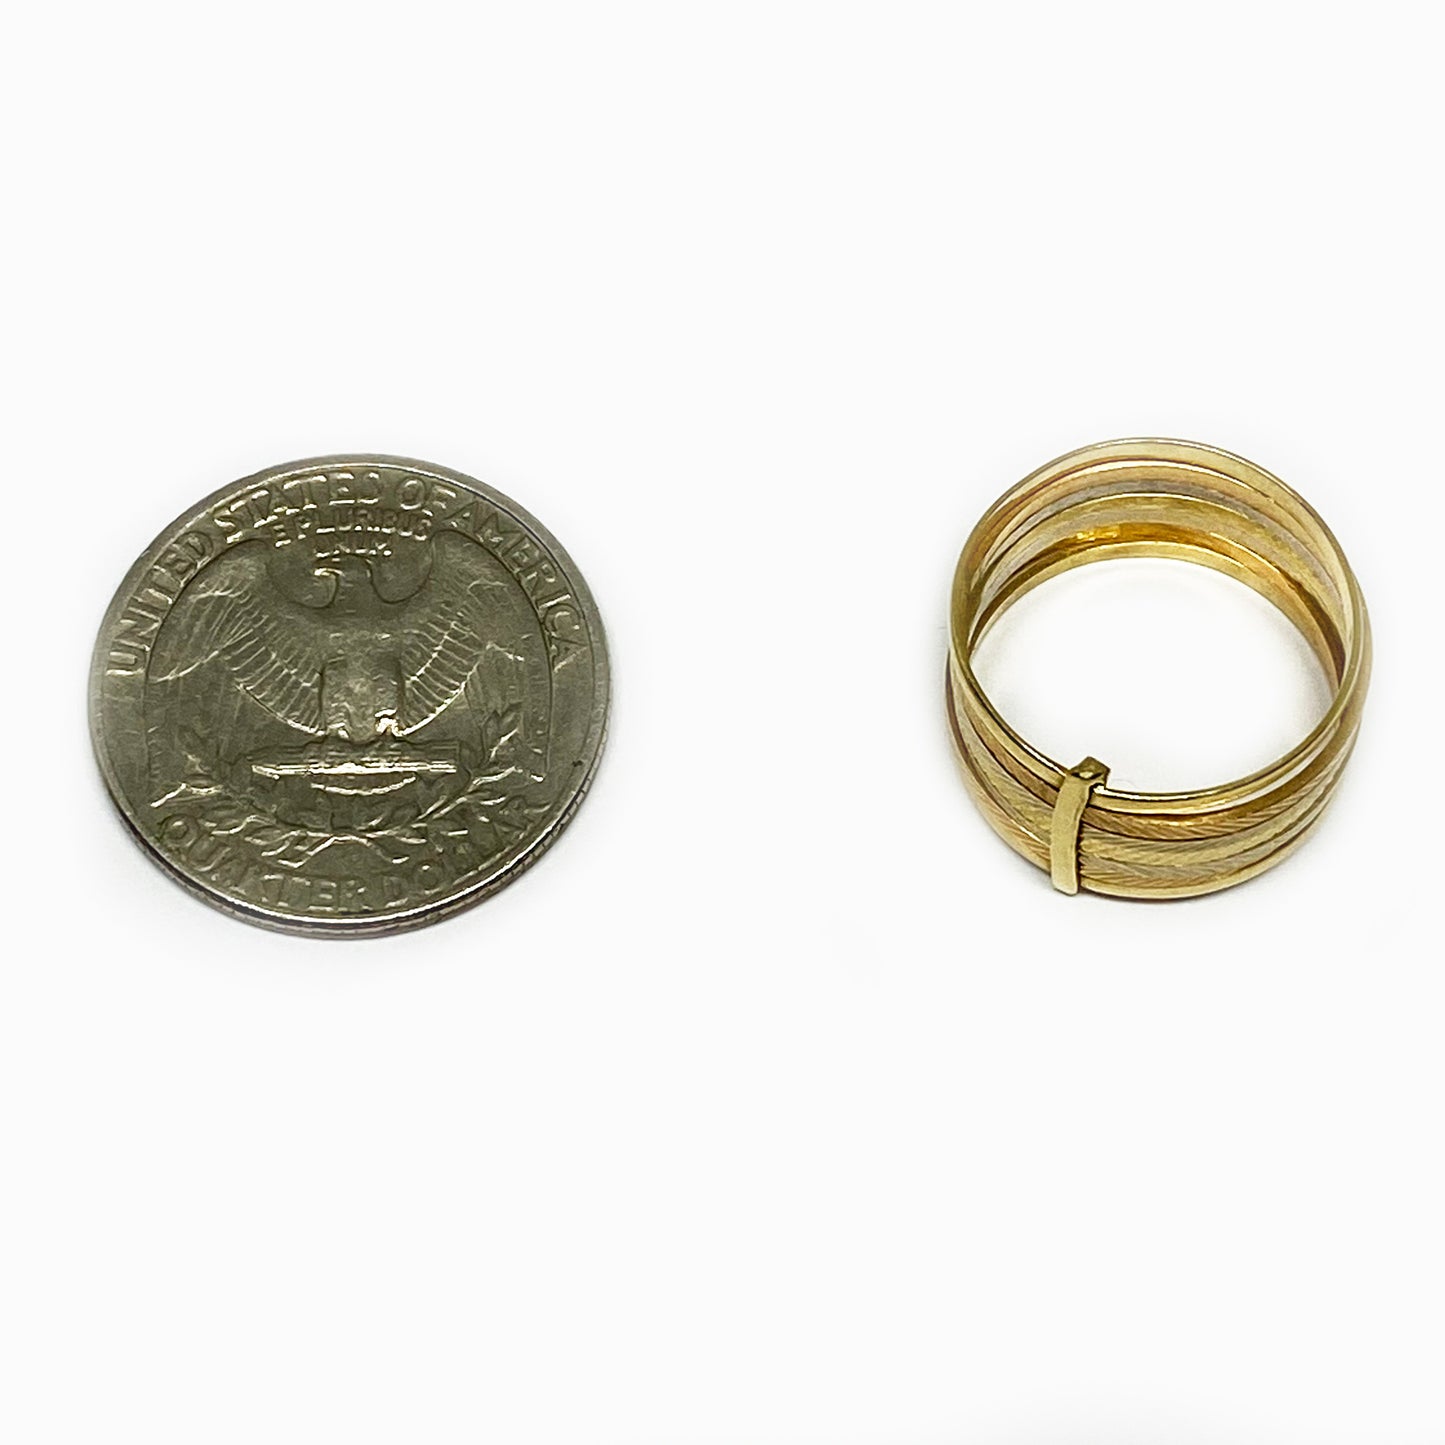 Vintage 18k Gold Semainier Ring